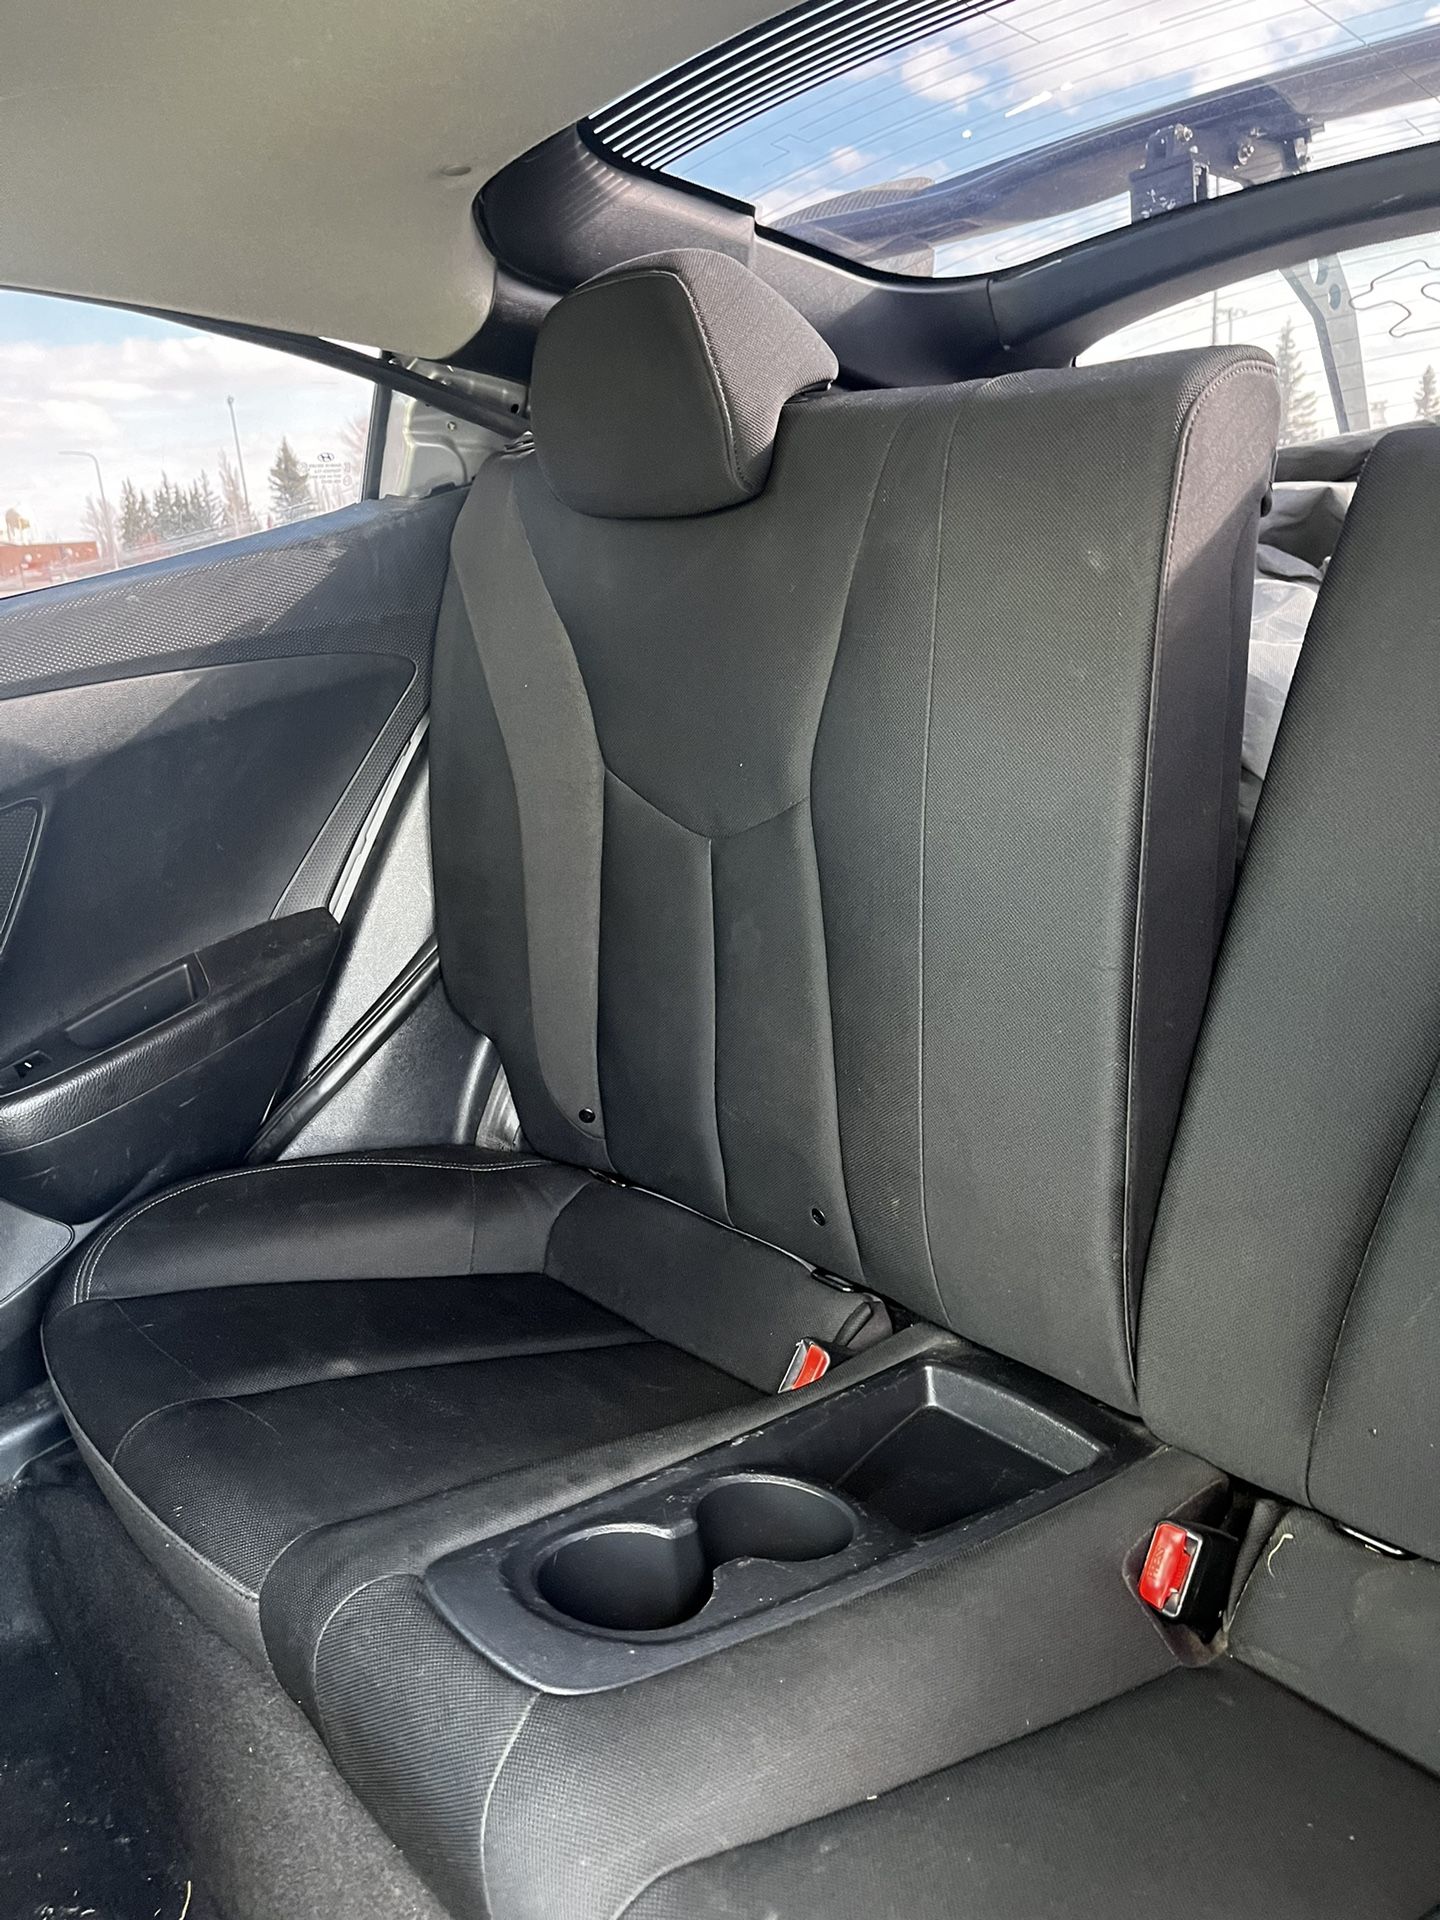 2016 Veloster Rear Seats